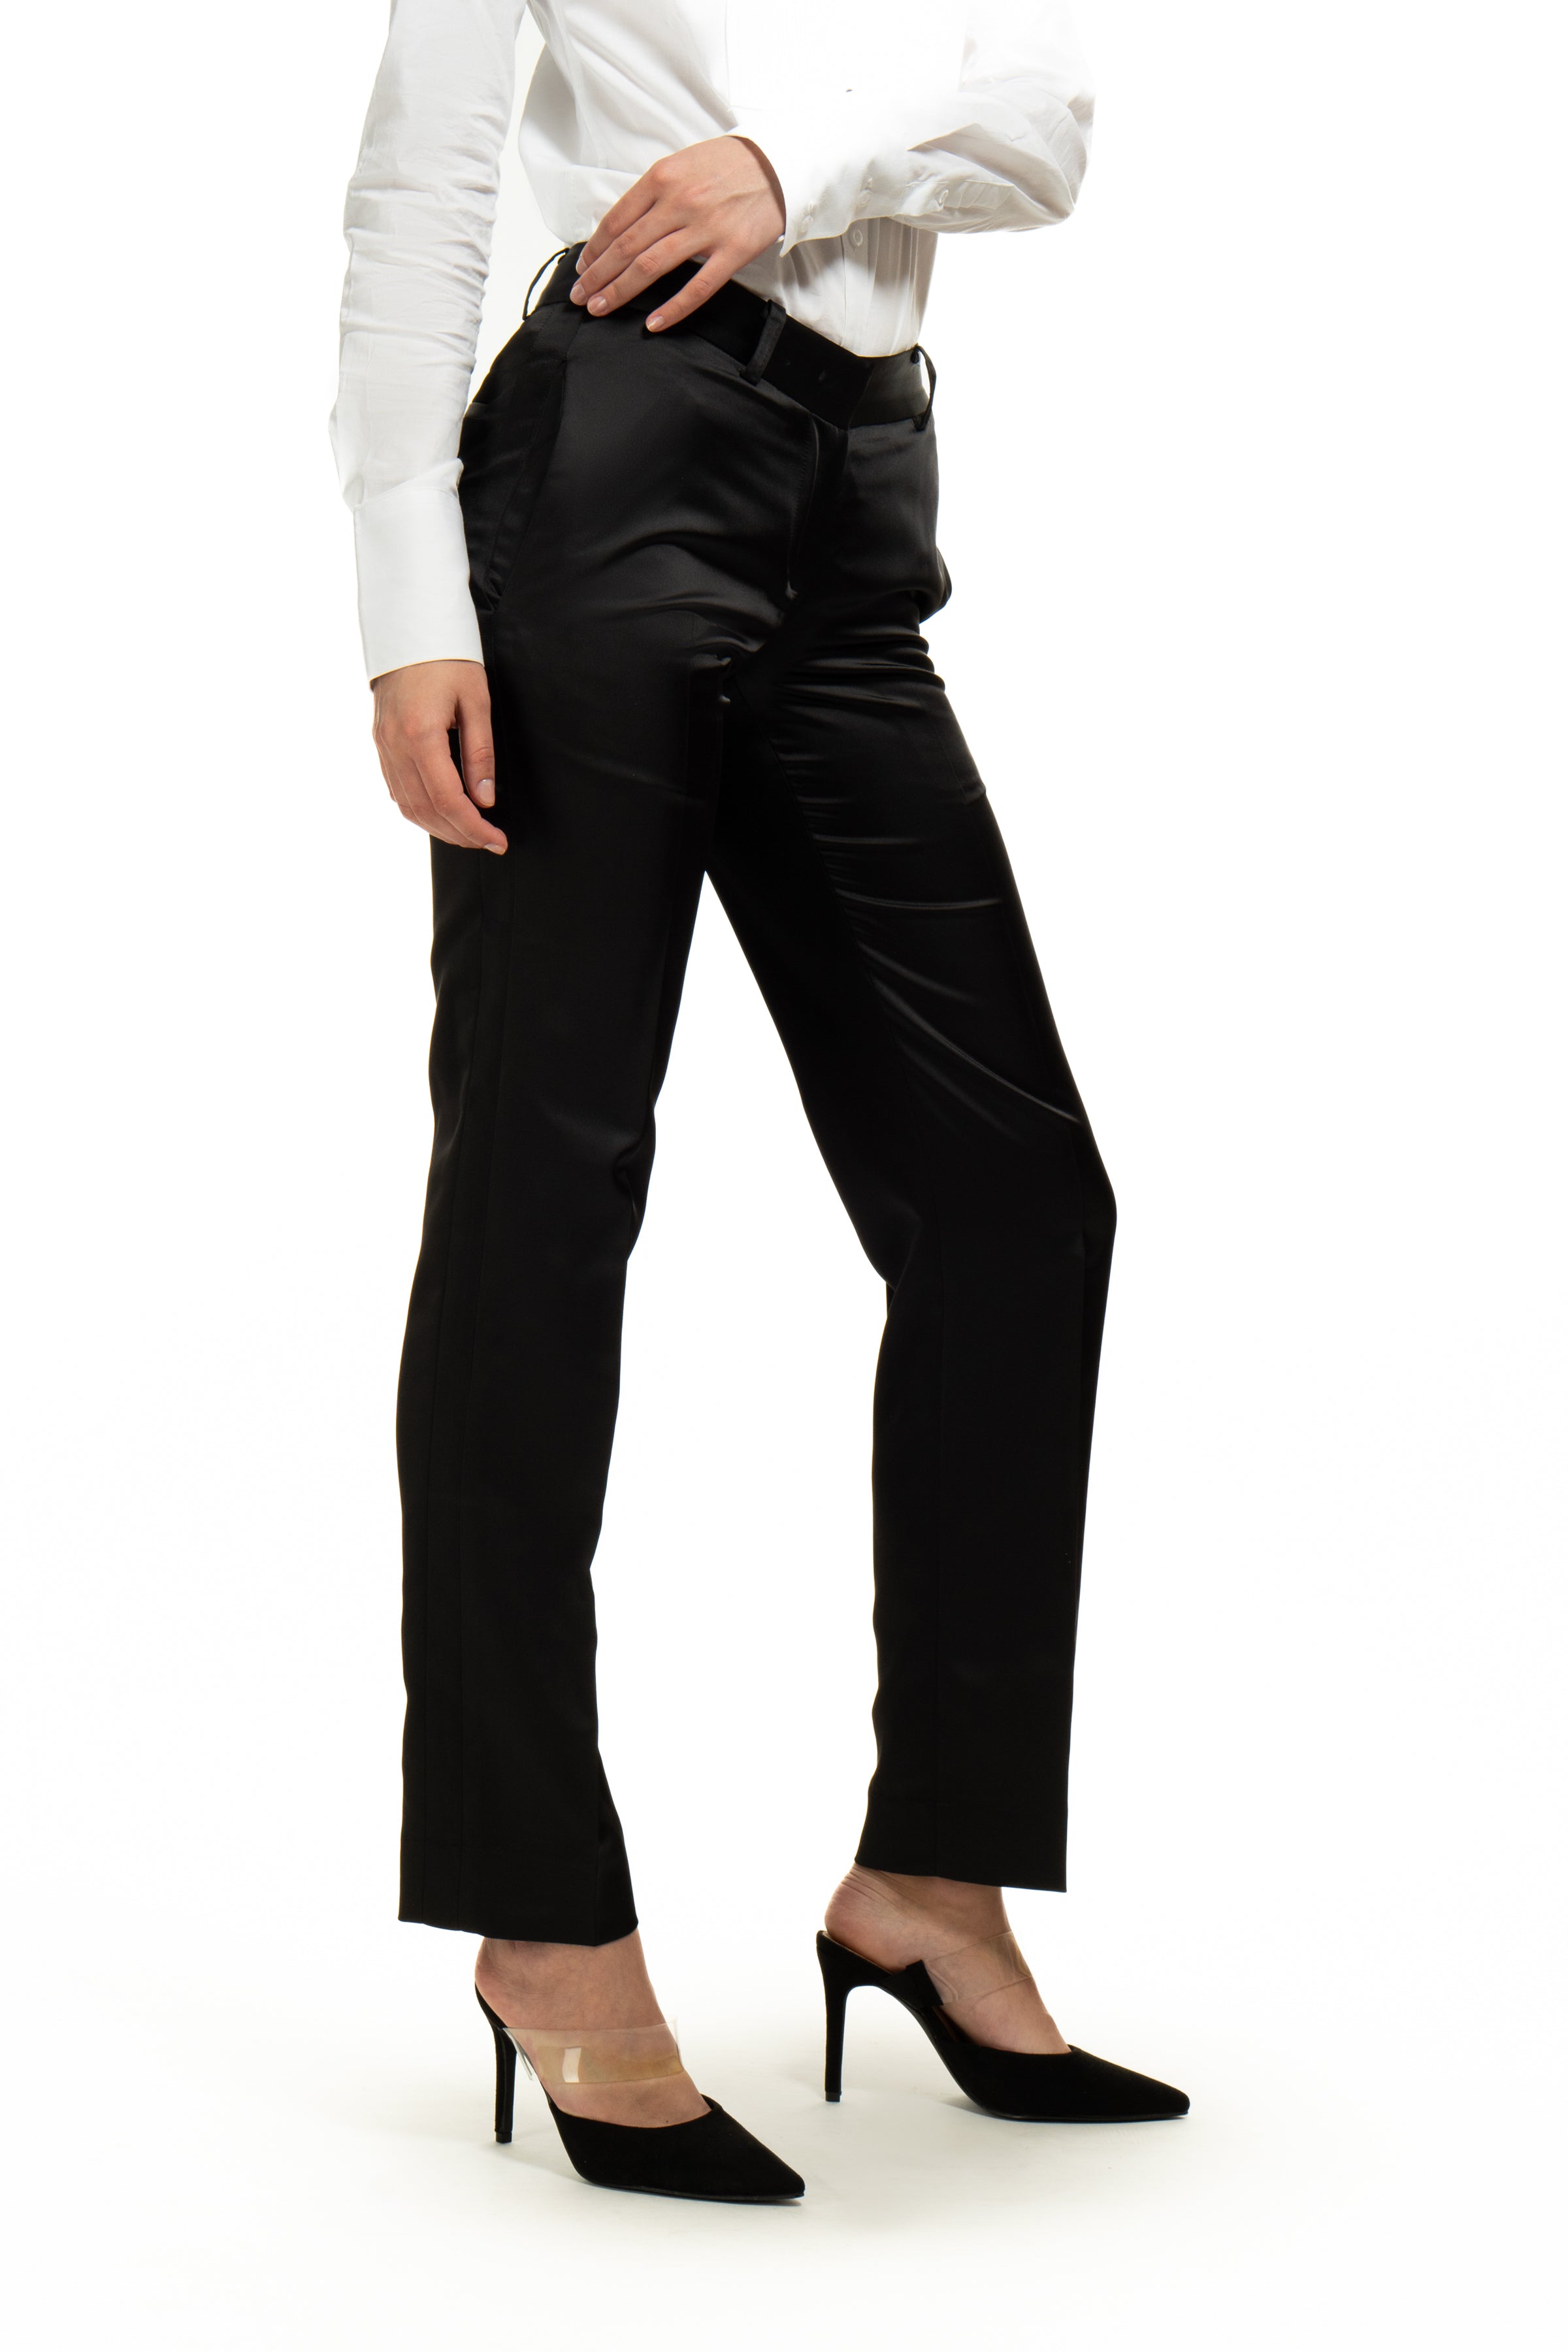 Asoran Women's Dress Pants Black Tuxedo Work Pants Stretch Skinny